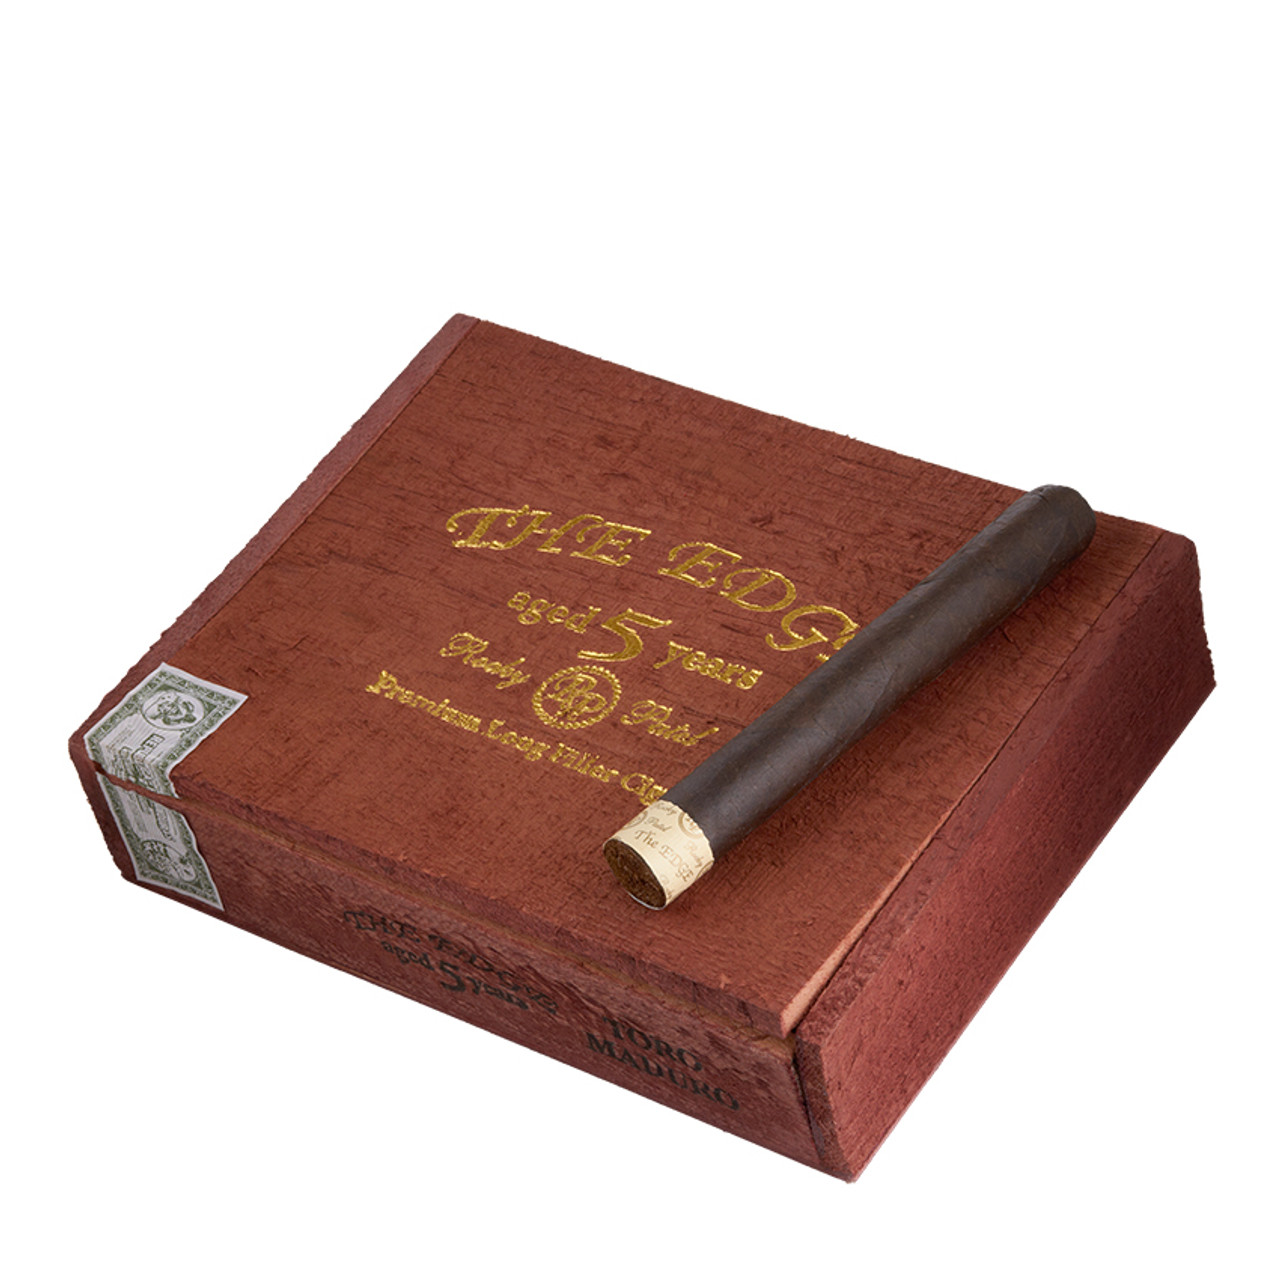 Rocky Patel The Edge Maduro Toro Cigars - 6 x 52 (Box of 20)